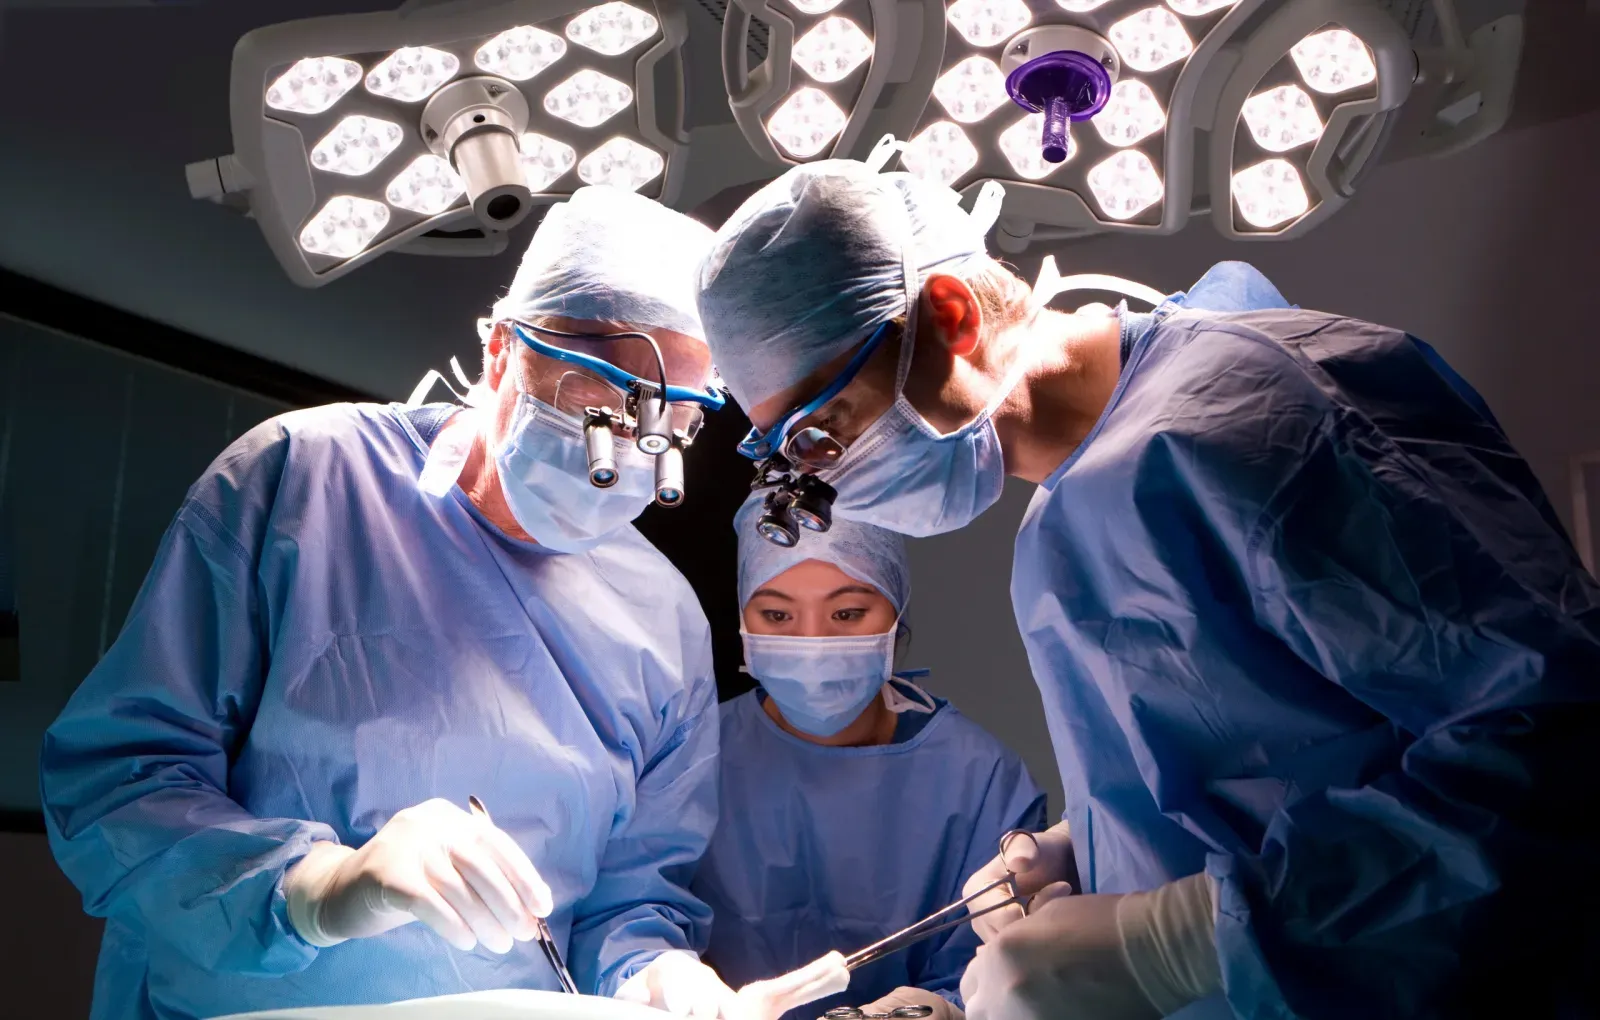 Mash: хирурги клиники в Москве повредили мозг пациенту при пластической операции